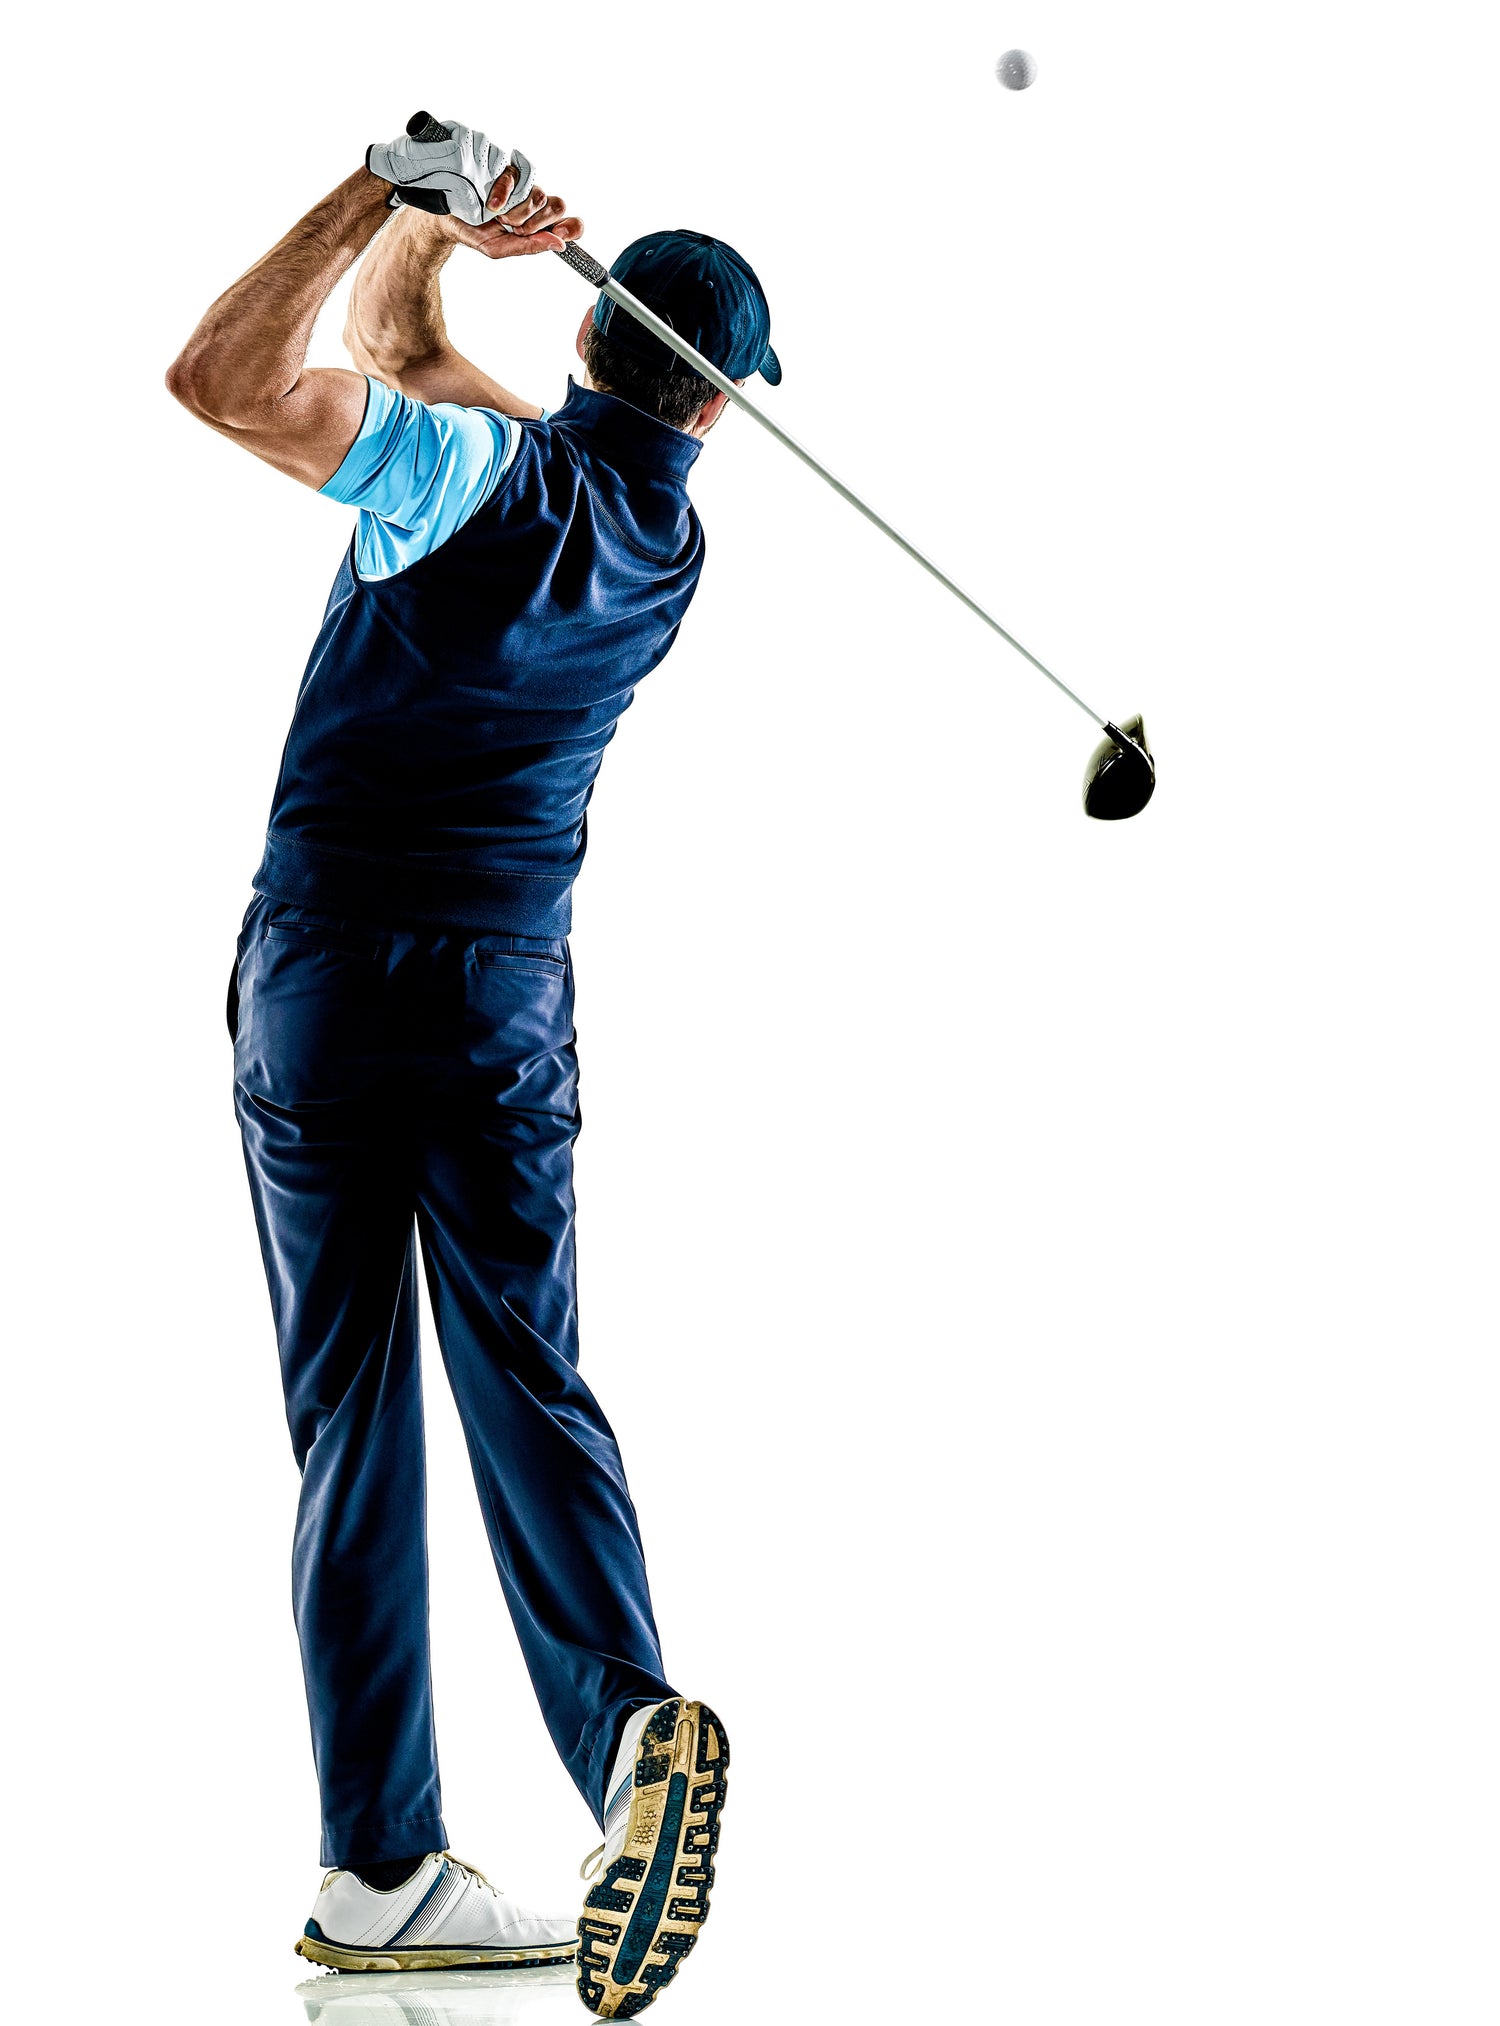 Golfer watching ball in flight